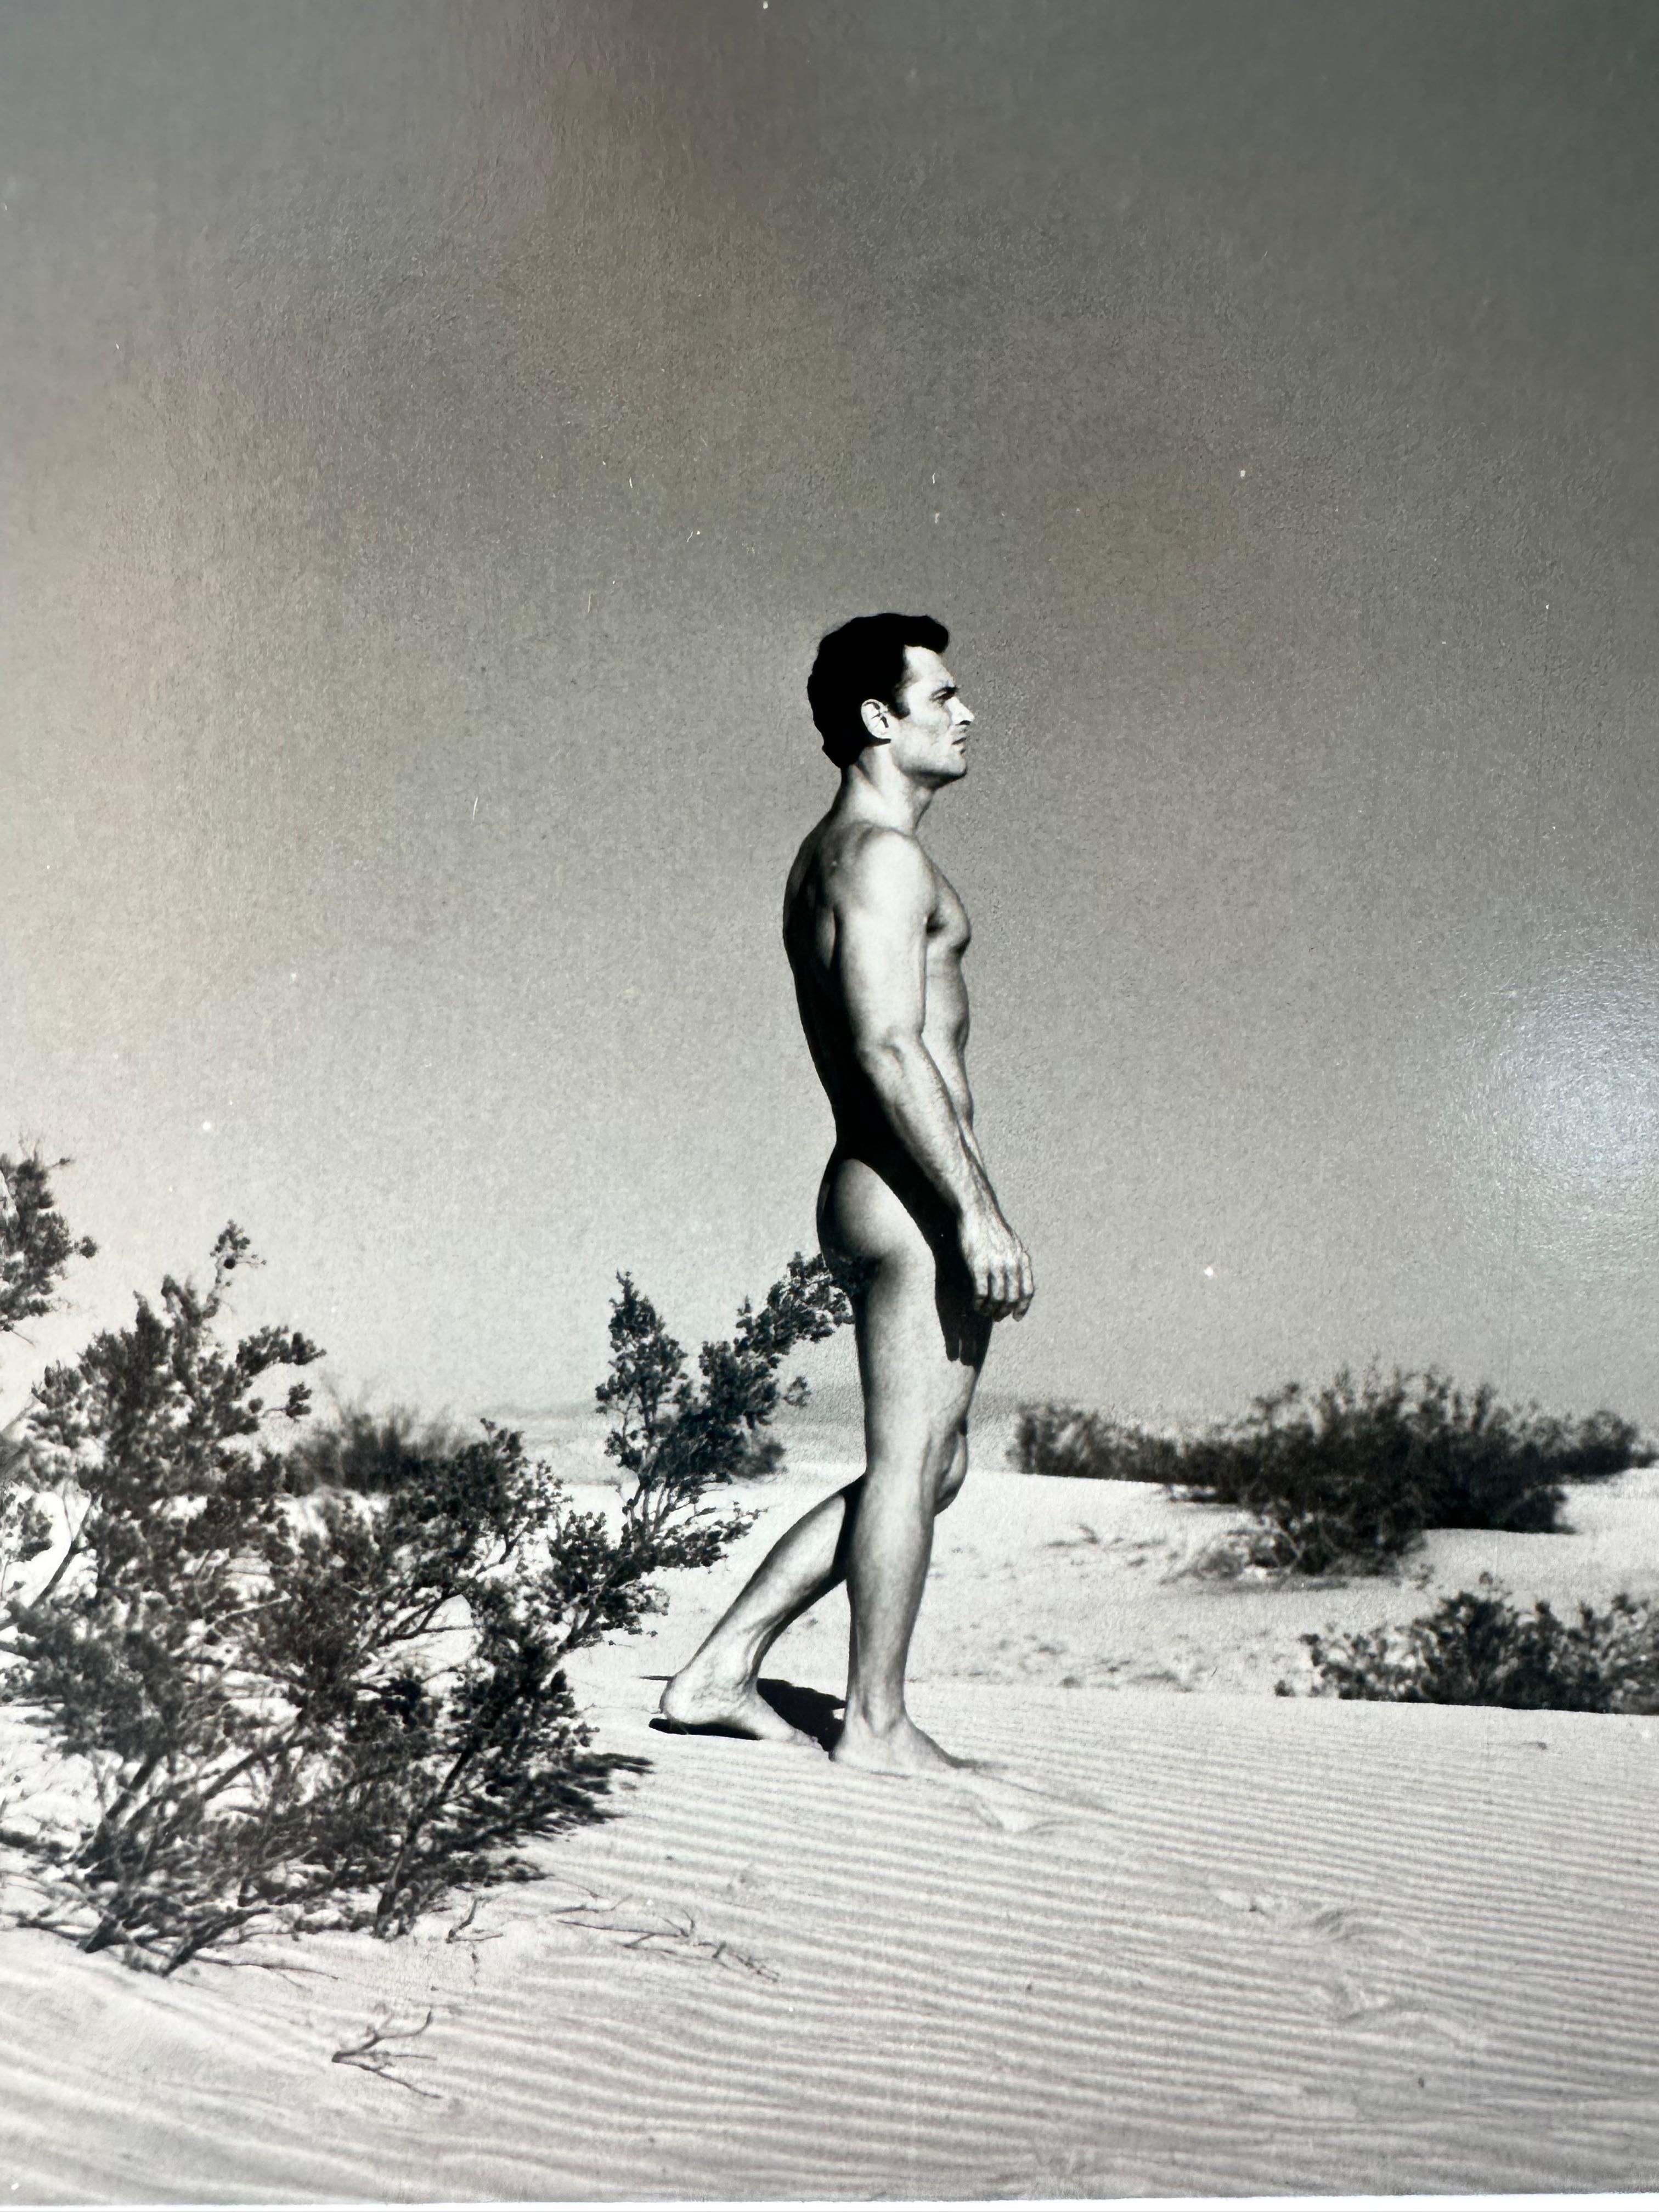 Male Nude Desert Landscape Study  - Photograph by Roy Dean